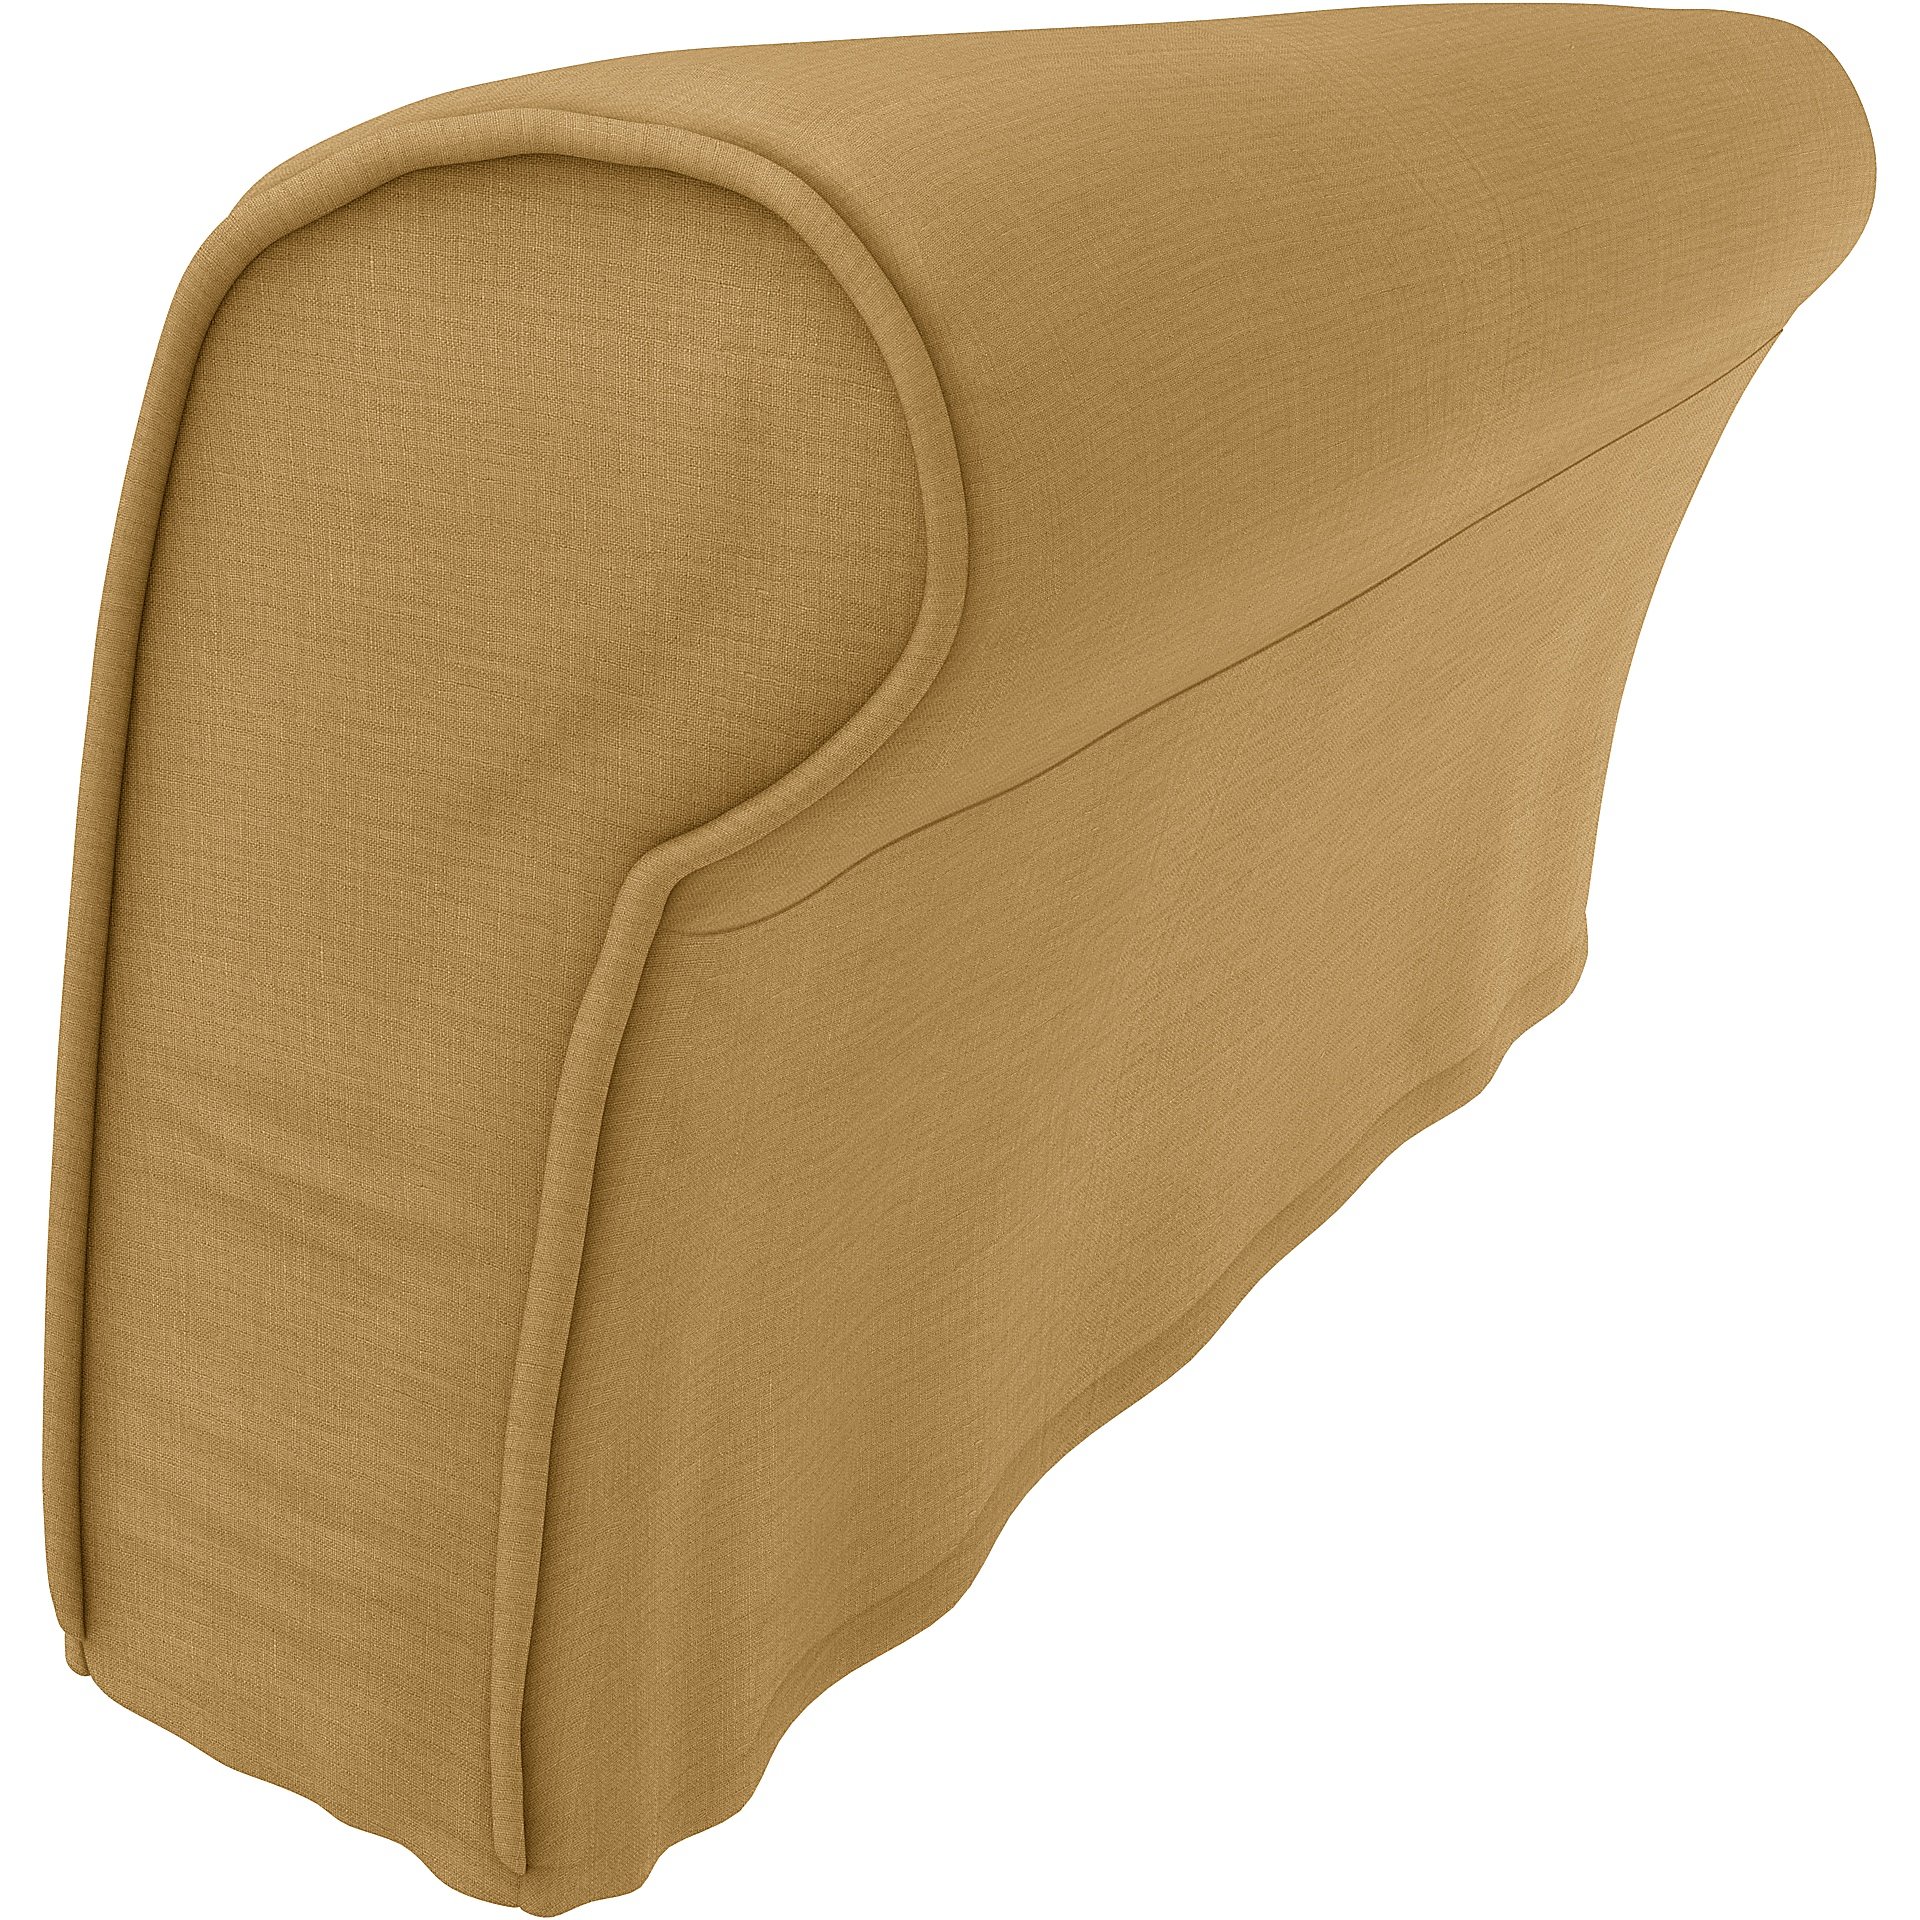 IKEA - Strandmon Armrest Protectors (One pair), Dusty Yellow, Linen - Bemz